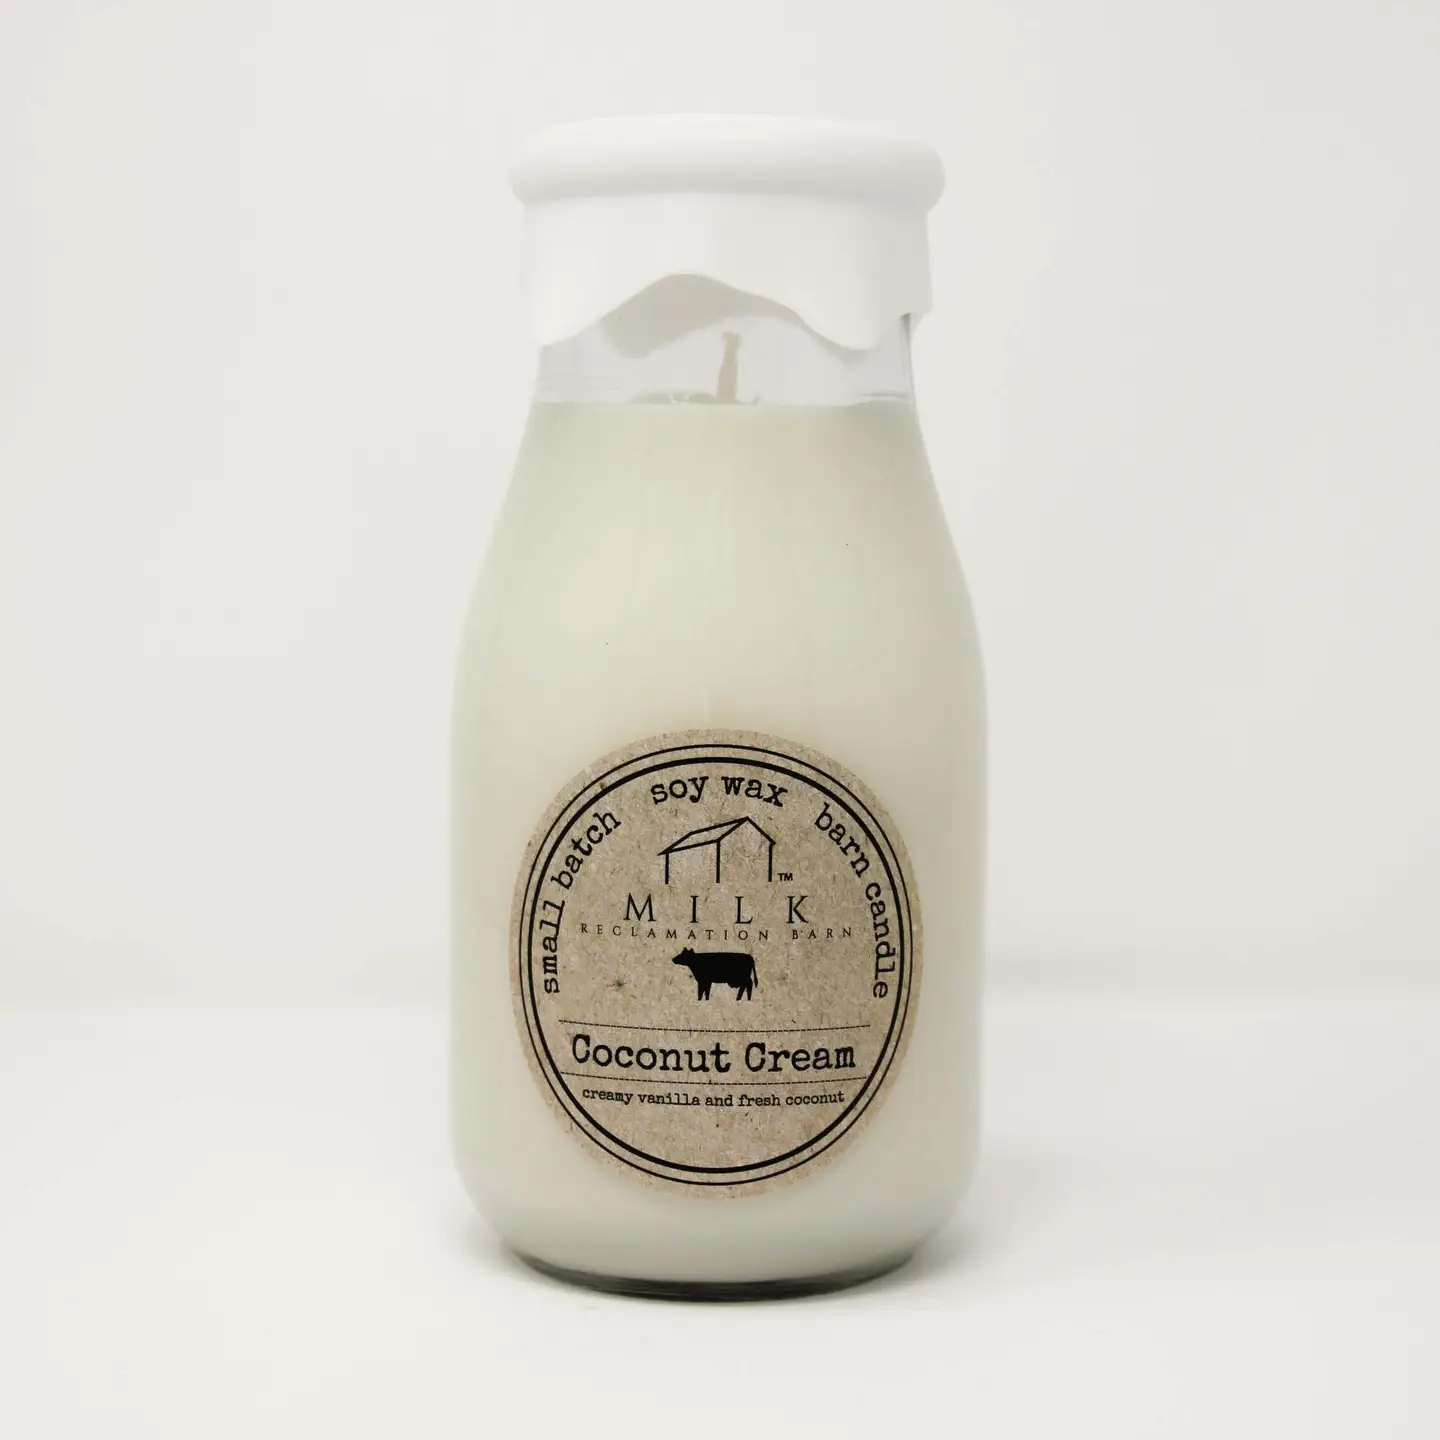 The Milk Bottle Candle - Coconut Cream